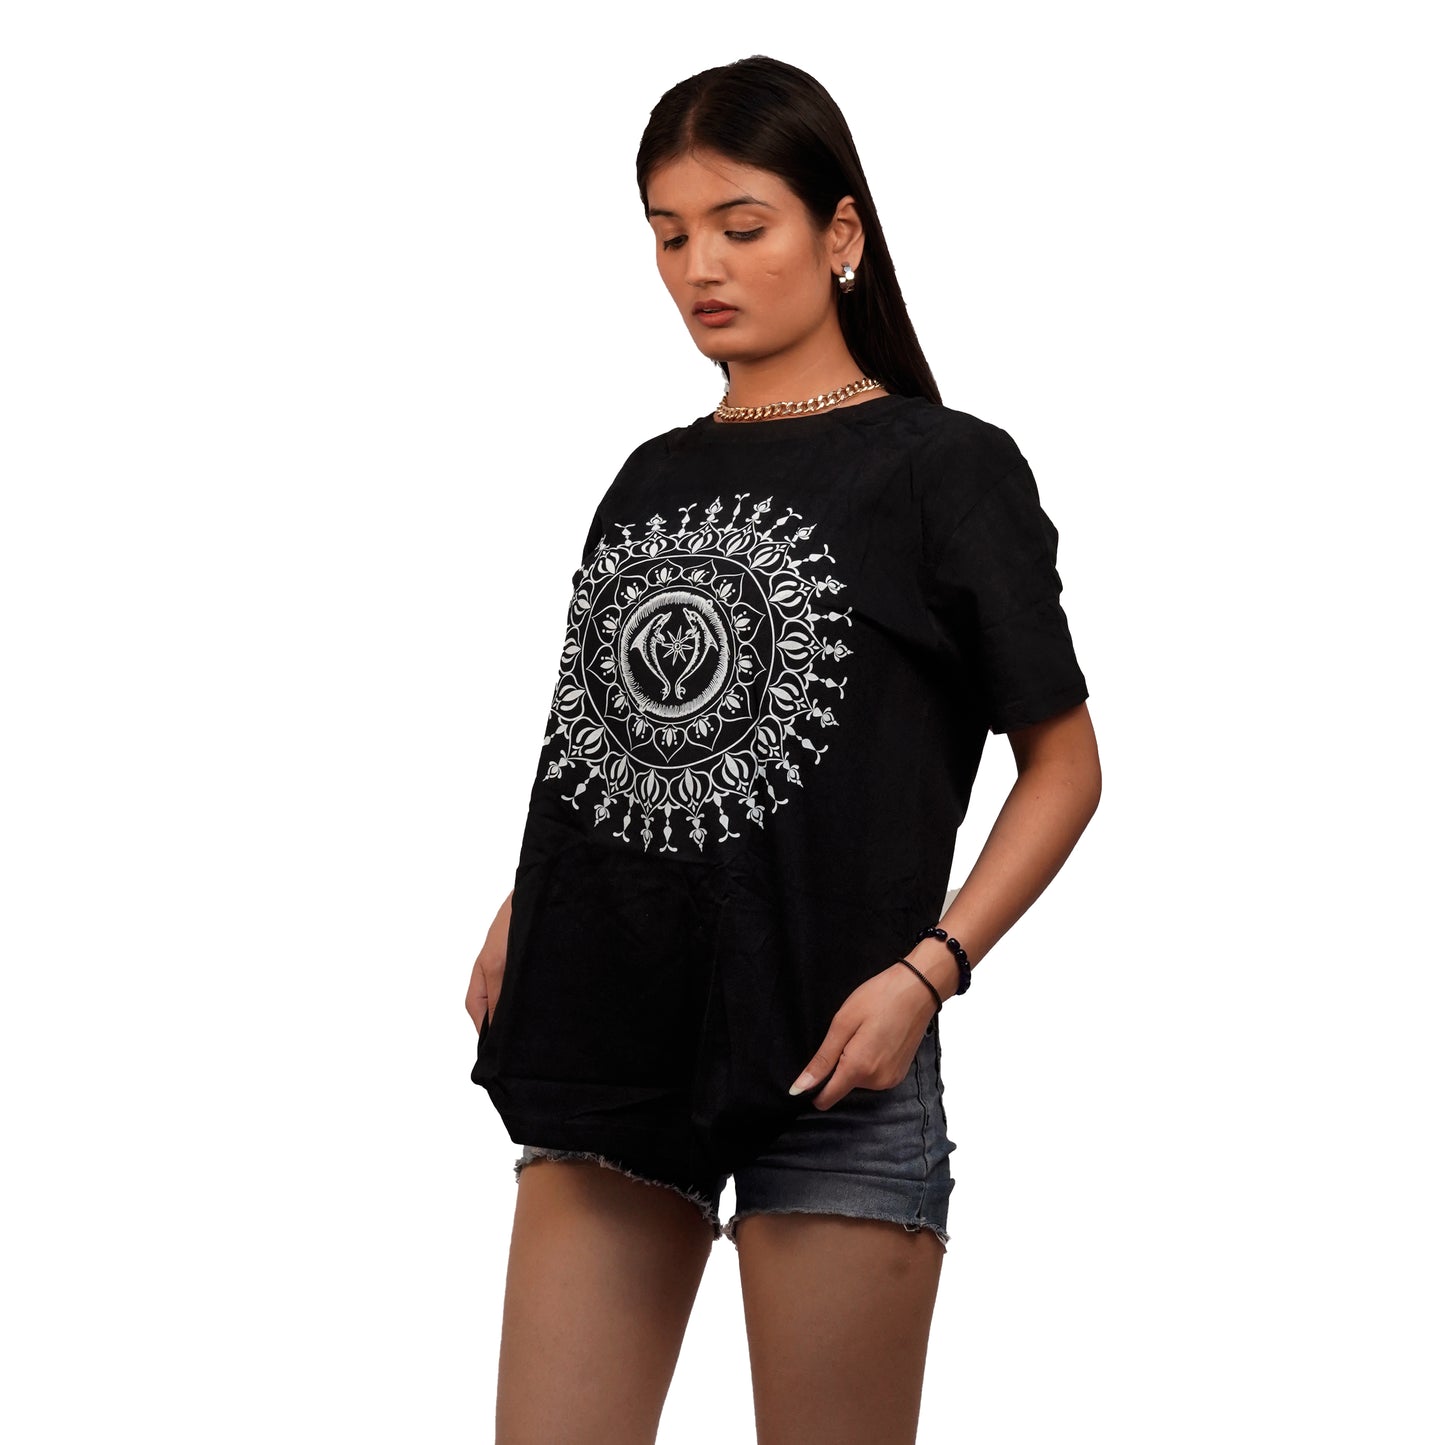 Nirvana Dolphin 2 T-shirt Black Color For Women